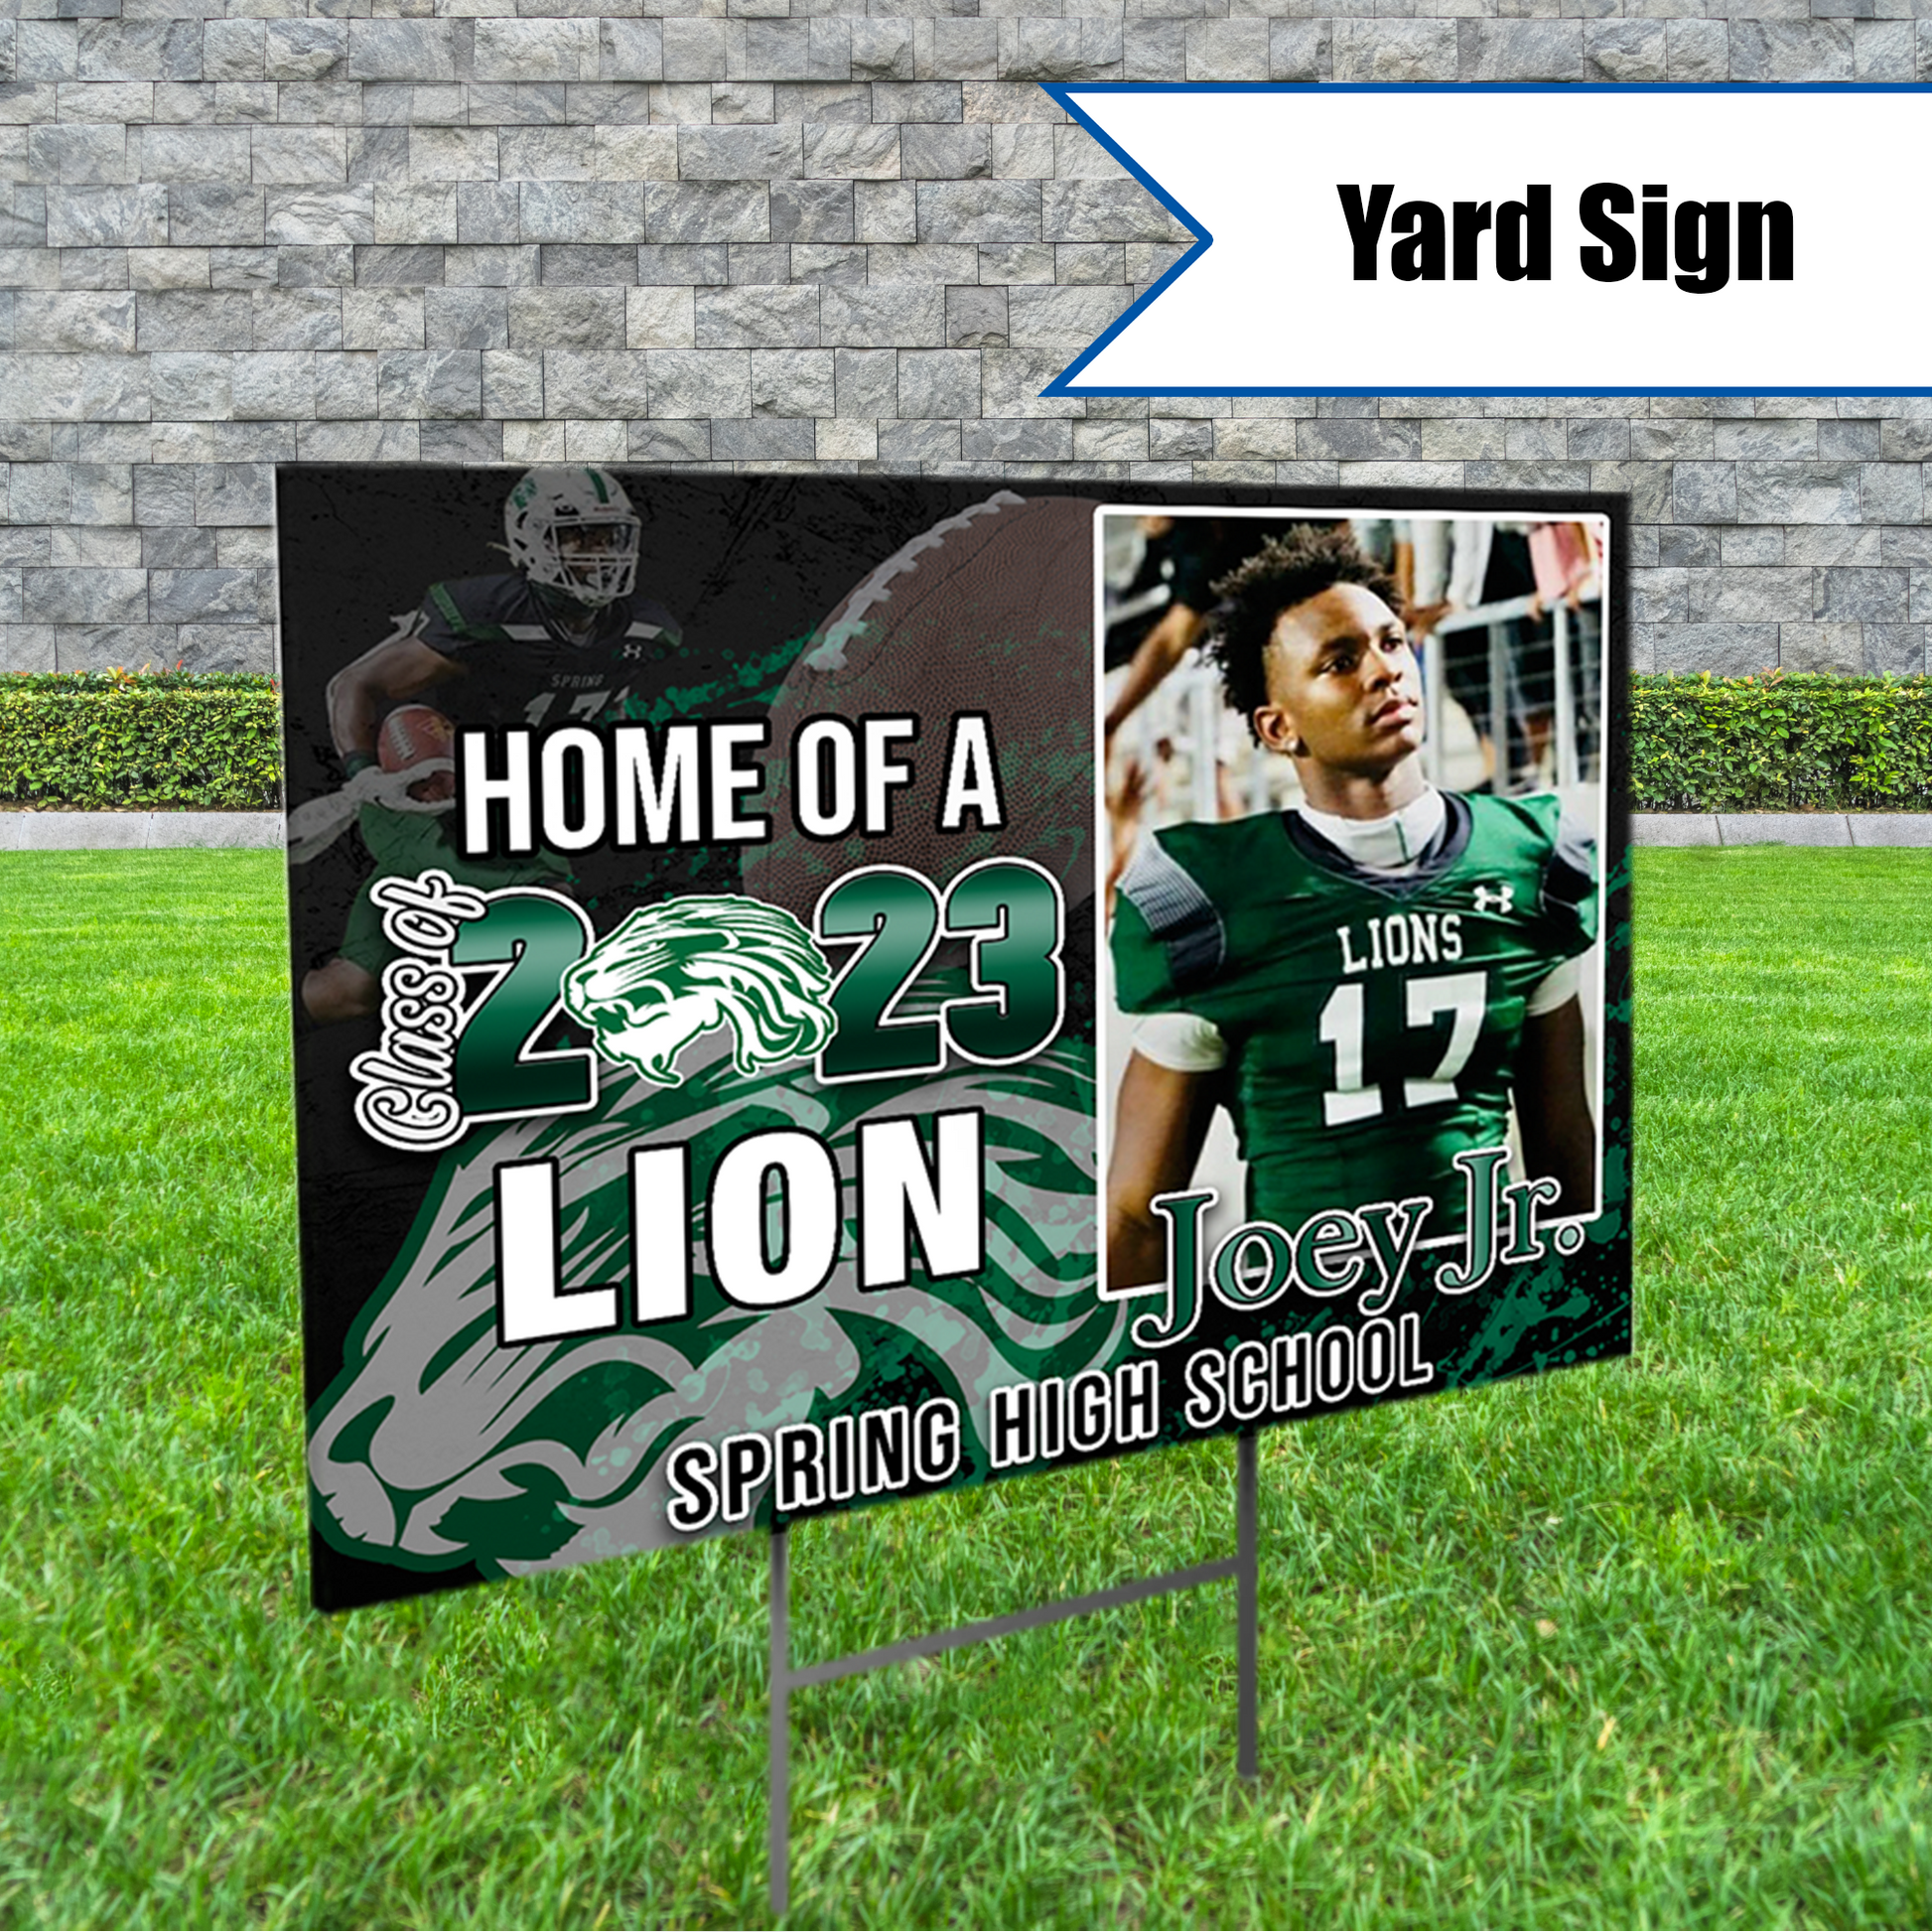 125-Spring High School Yard Sign - SthrngurlCreations